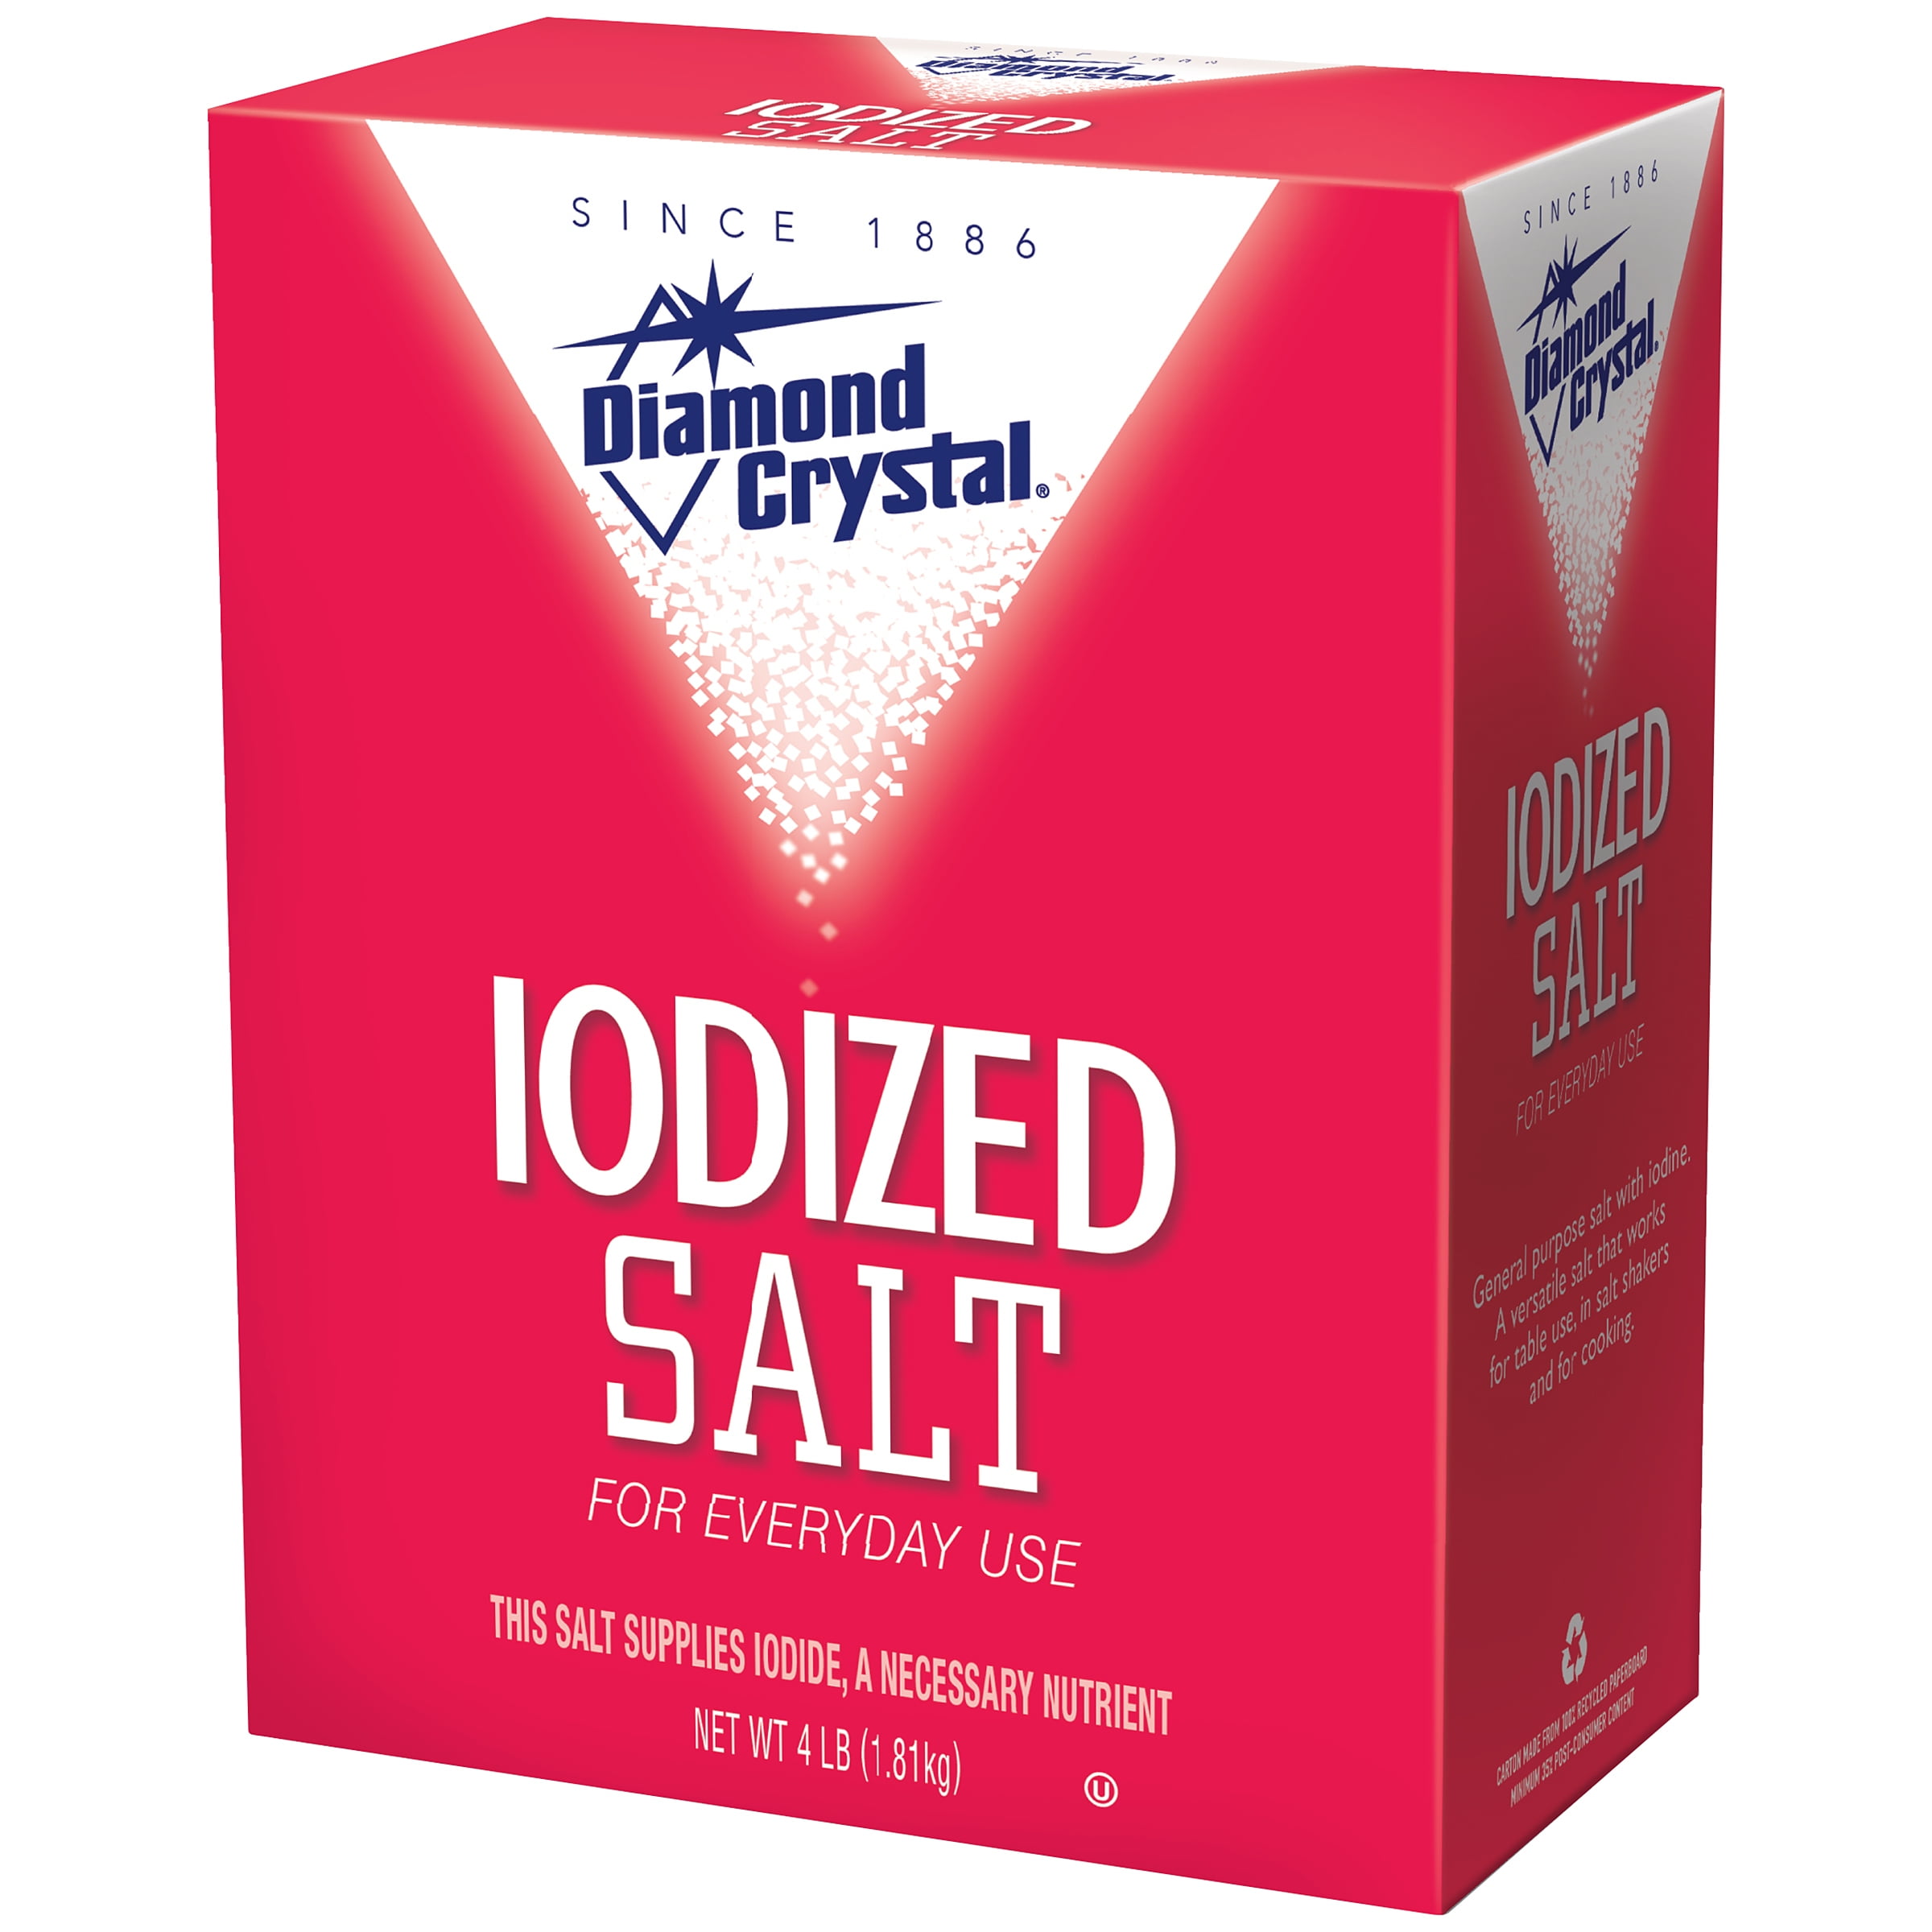 diamond-crystal-iodized-salt-4-lb-box-walmart